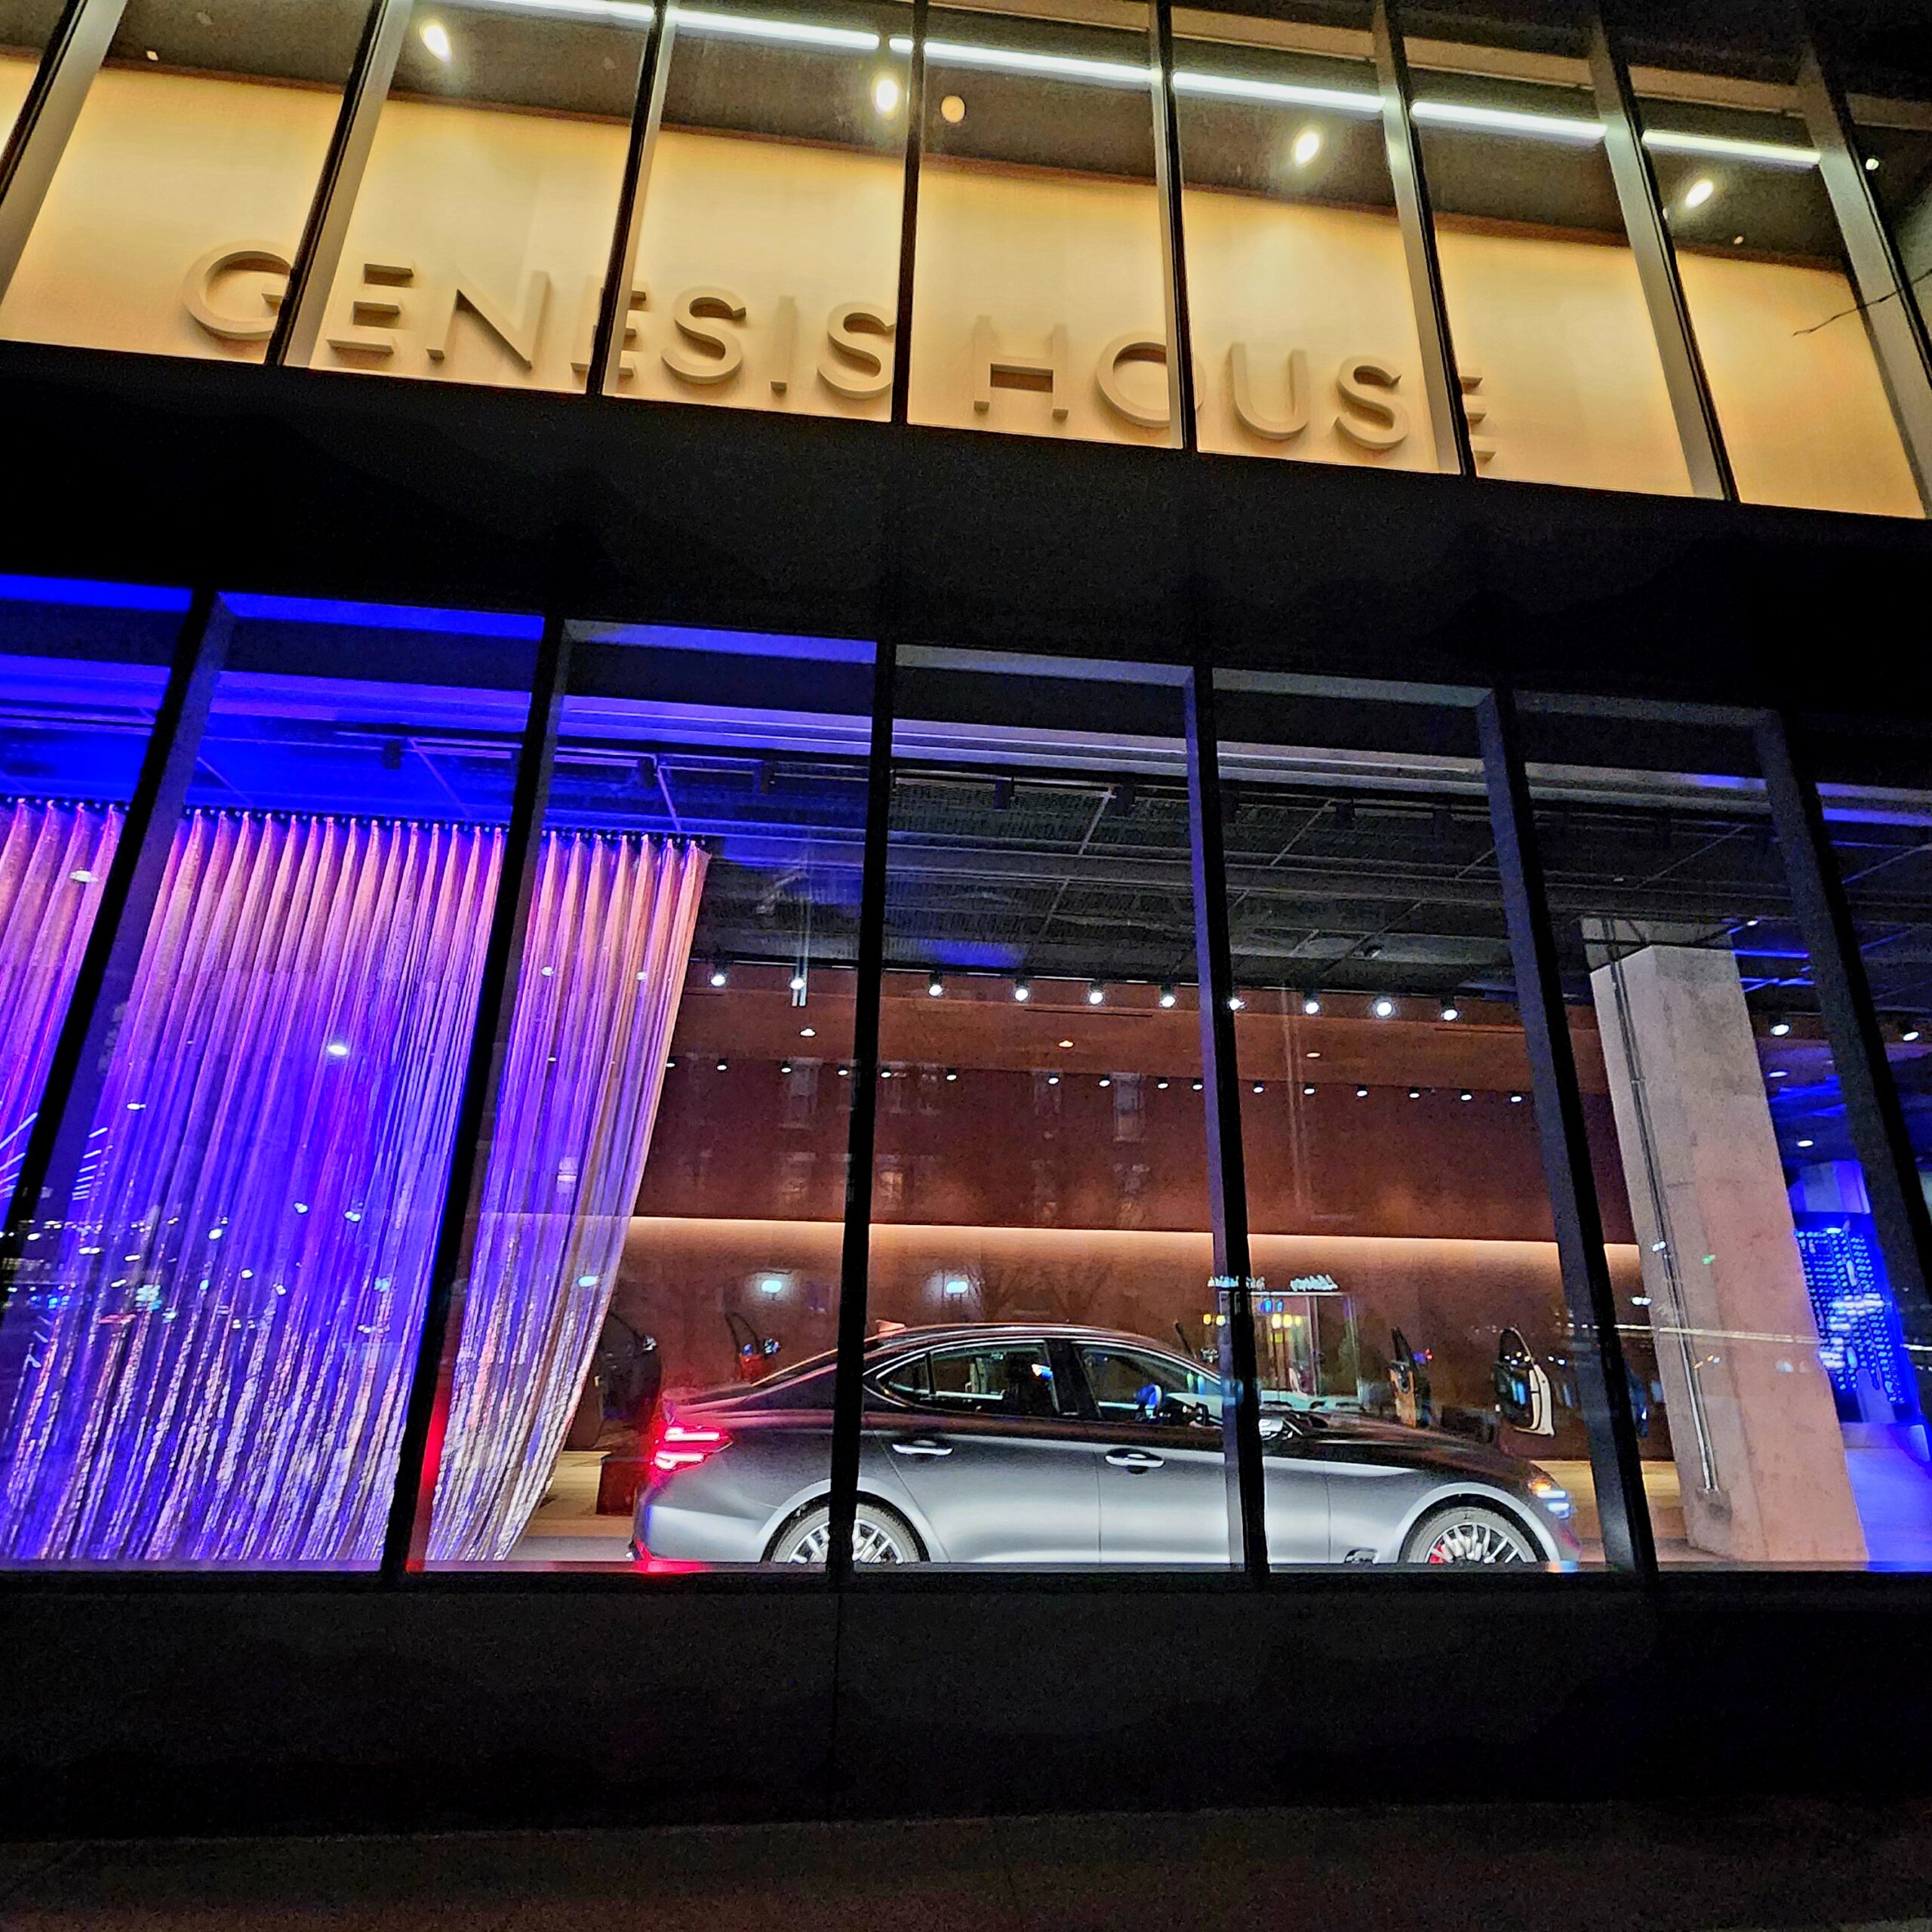 Genesis Motor and High Line Winter Lights presentation via 360 MAGAZINE in NYC. 

